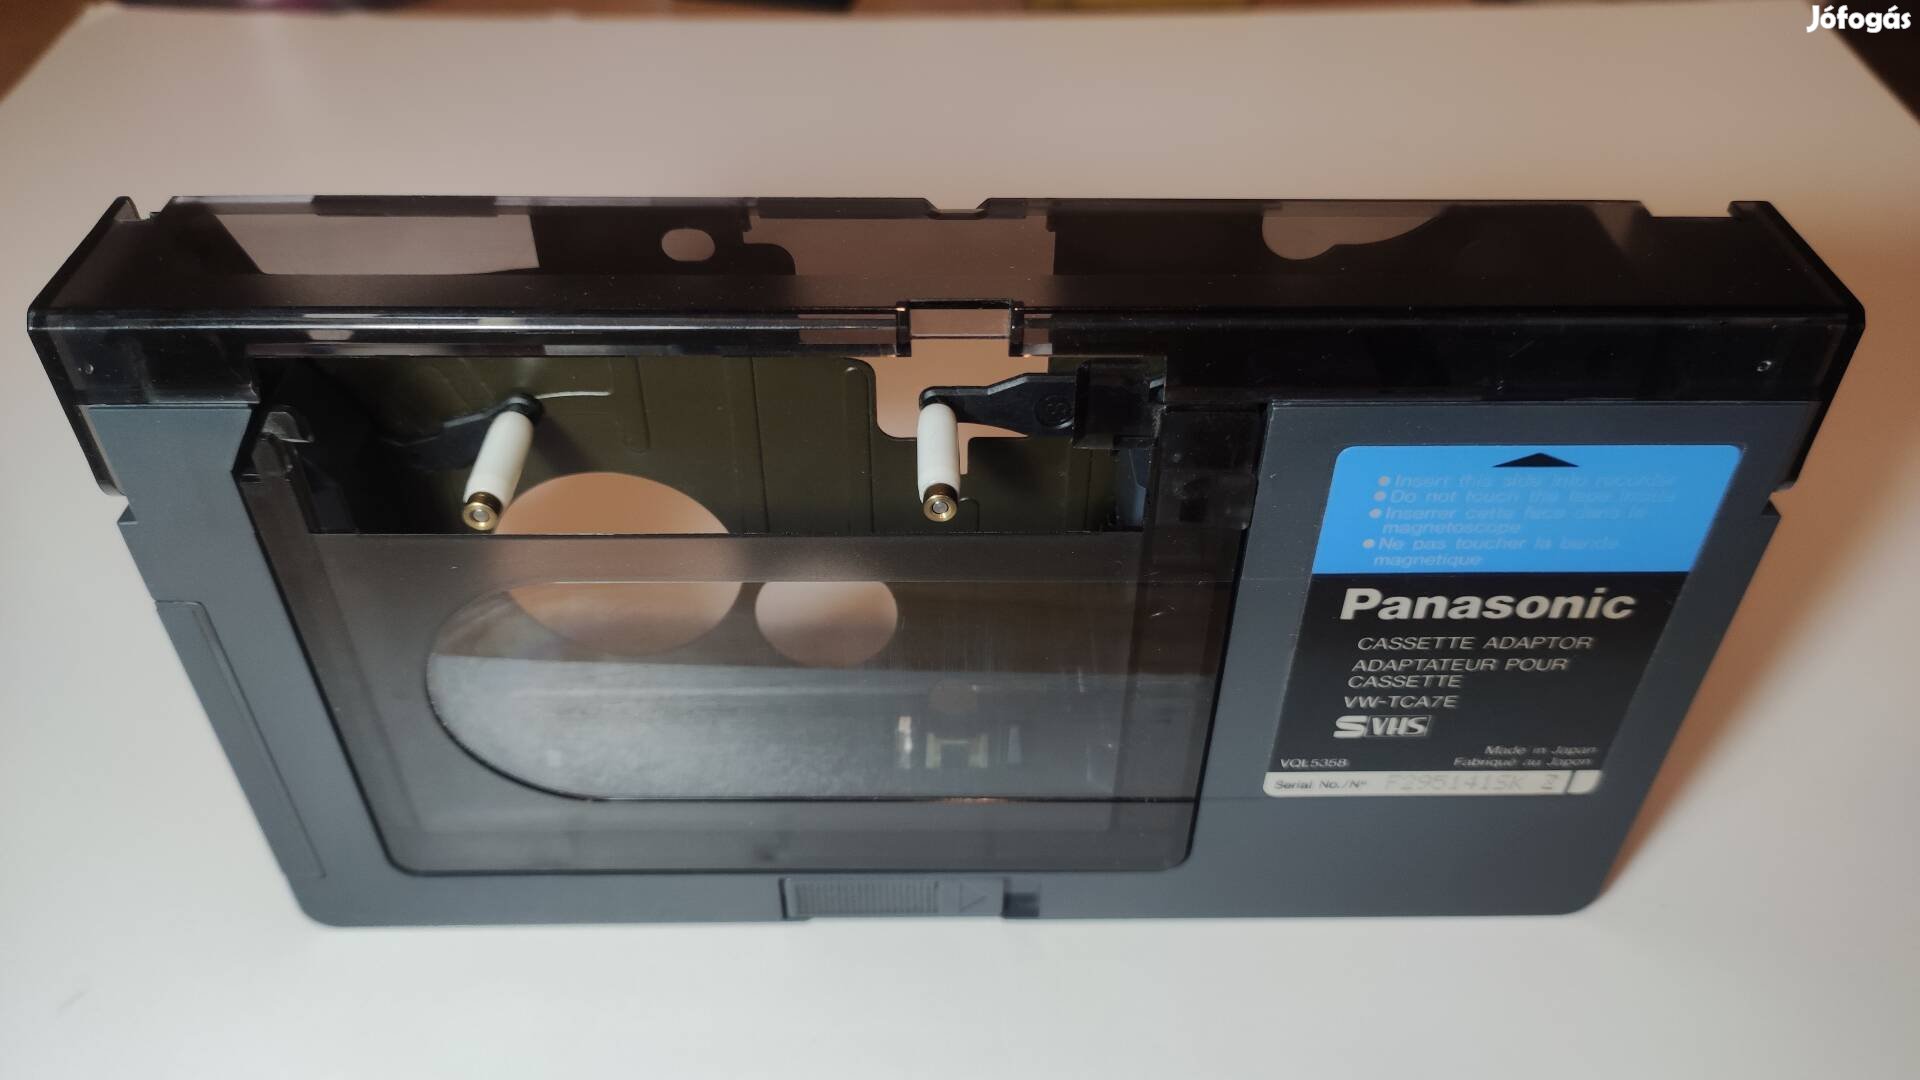 Panasonic VHS C kazetta adapter